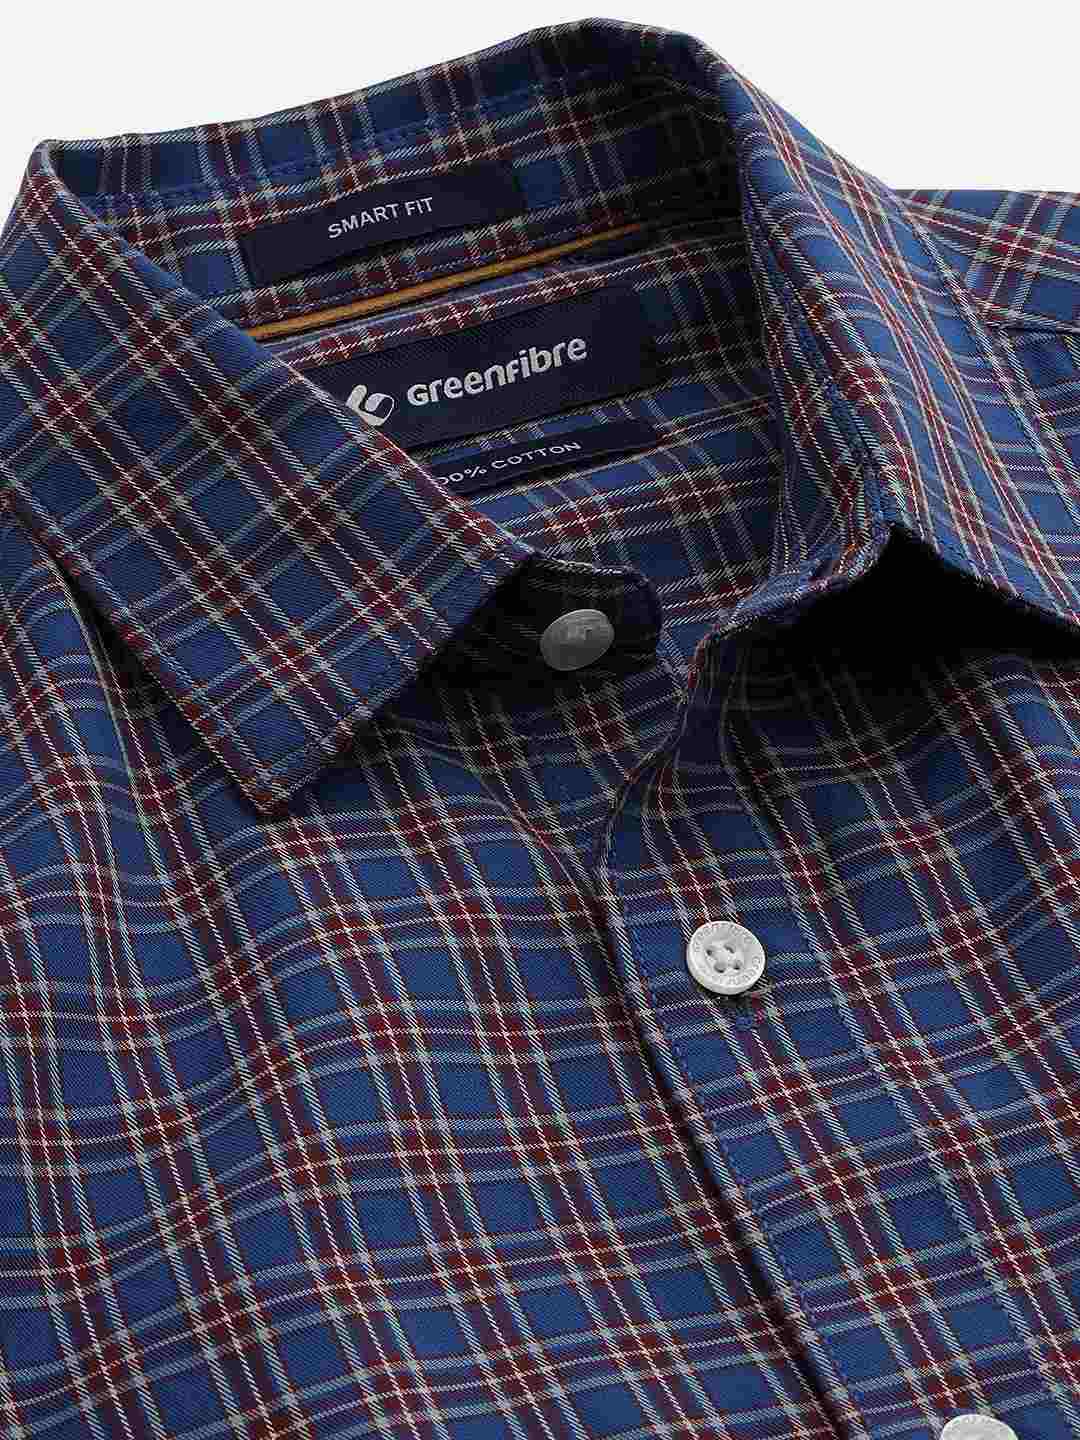 Dutch Blue Checked Smart Fit Semi Casual Shirt | Greenfibre